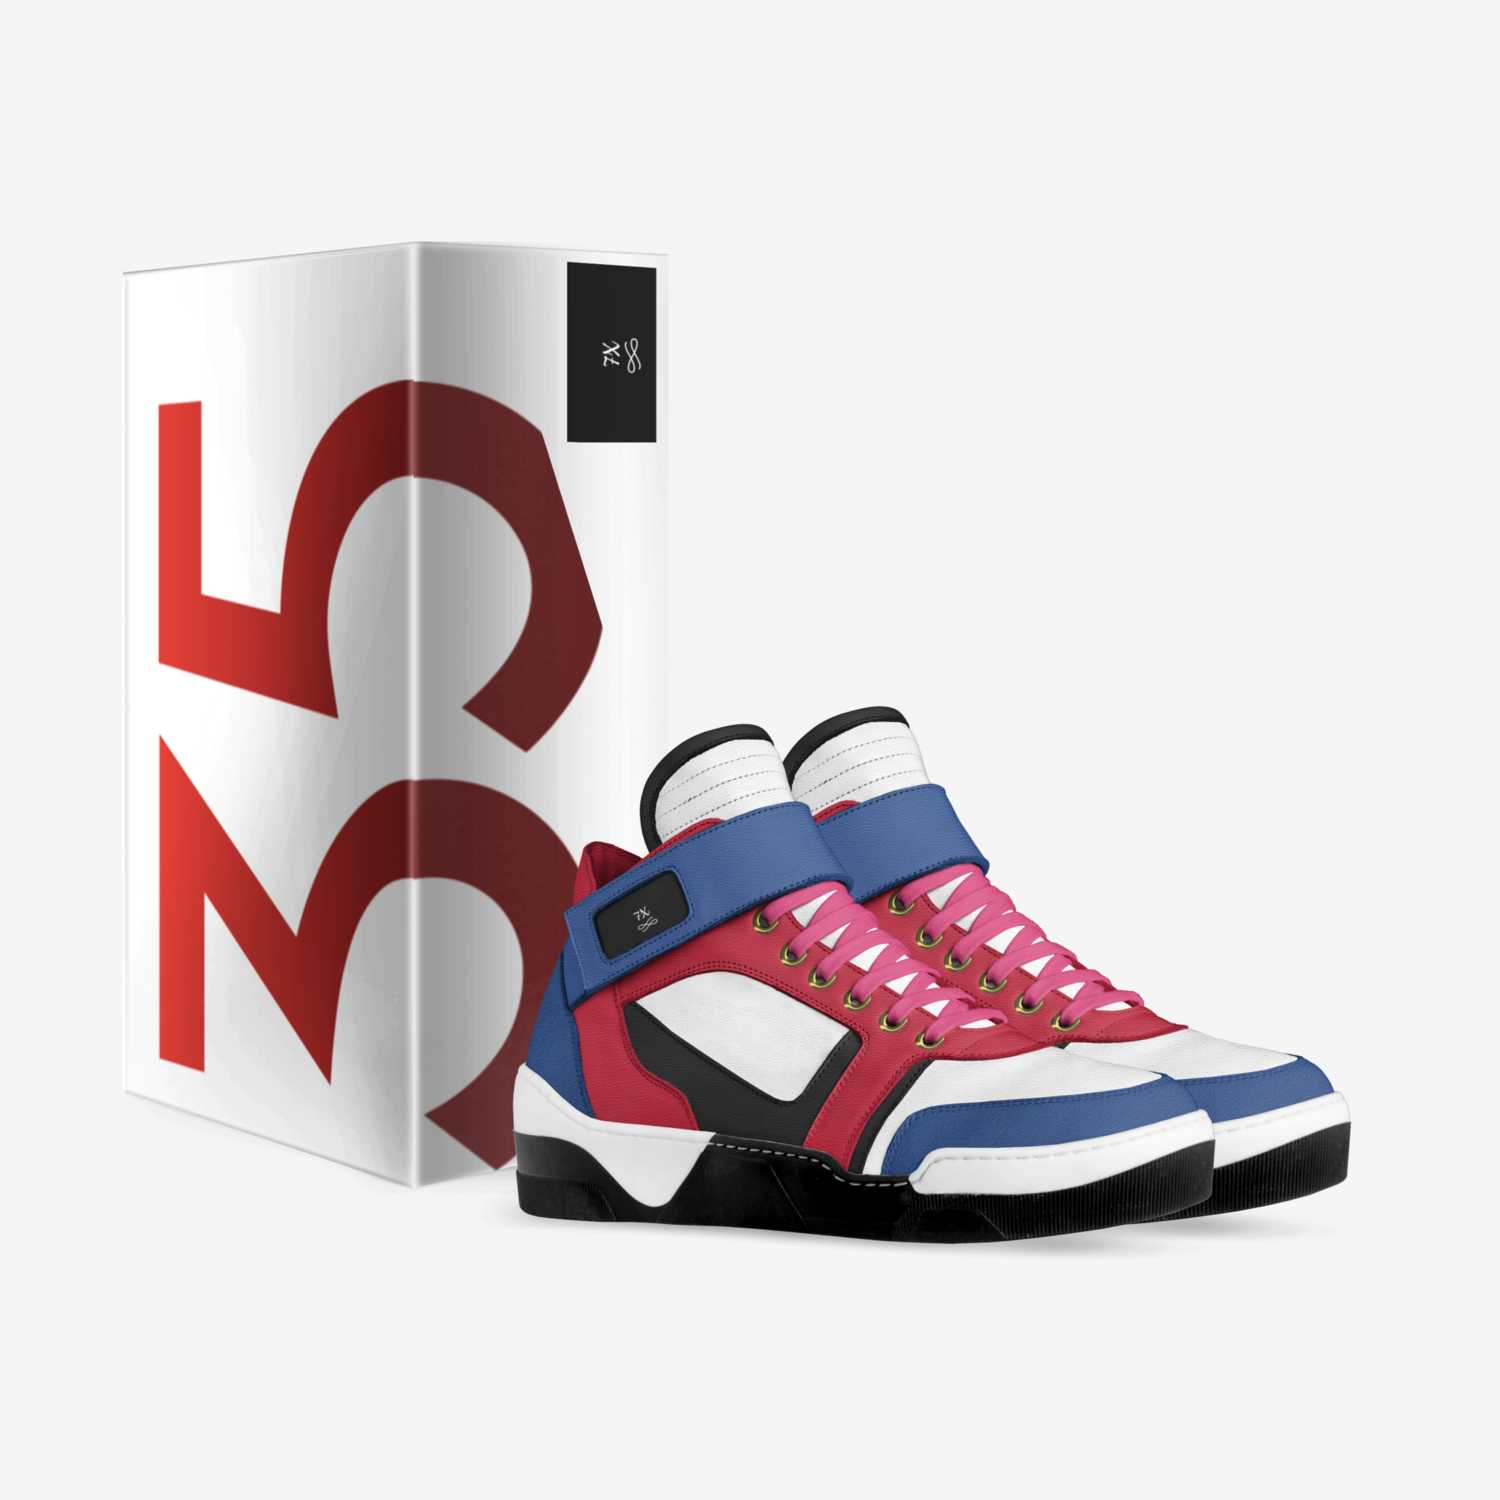 Aidan 7x 1 custom made in Italy shoes by Josh Roam | Box view